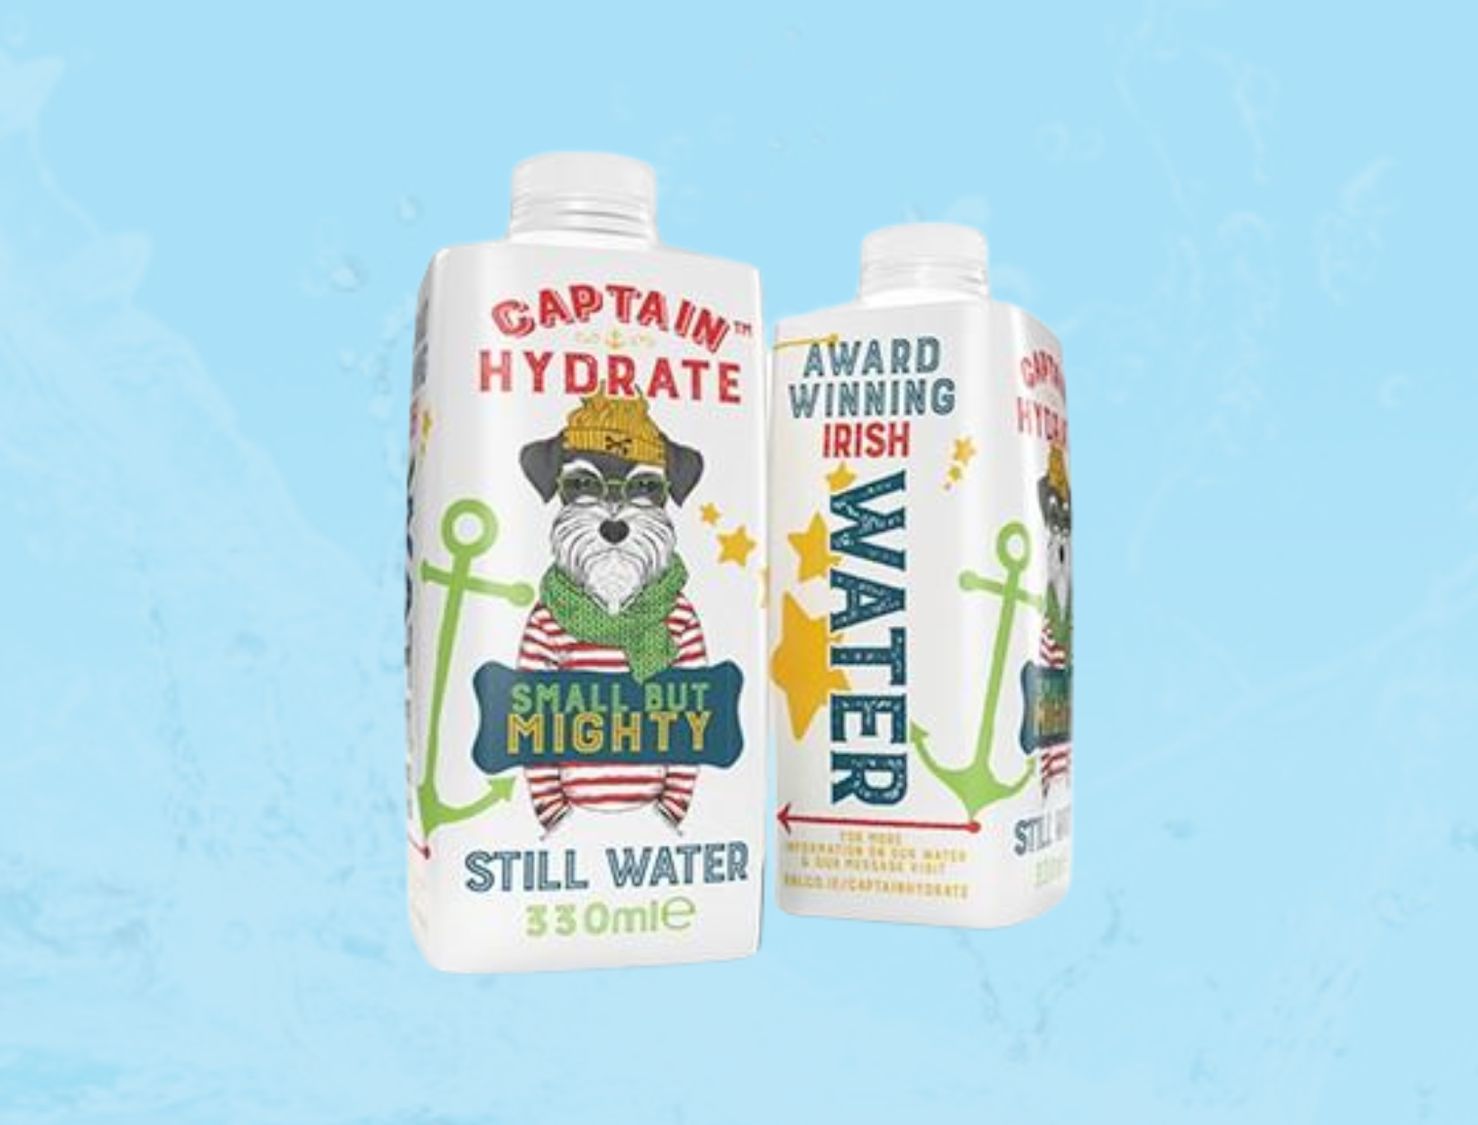 captain-hydrate-4-copy